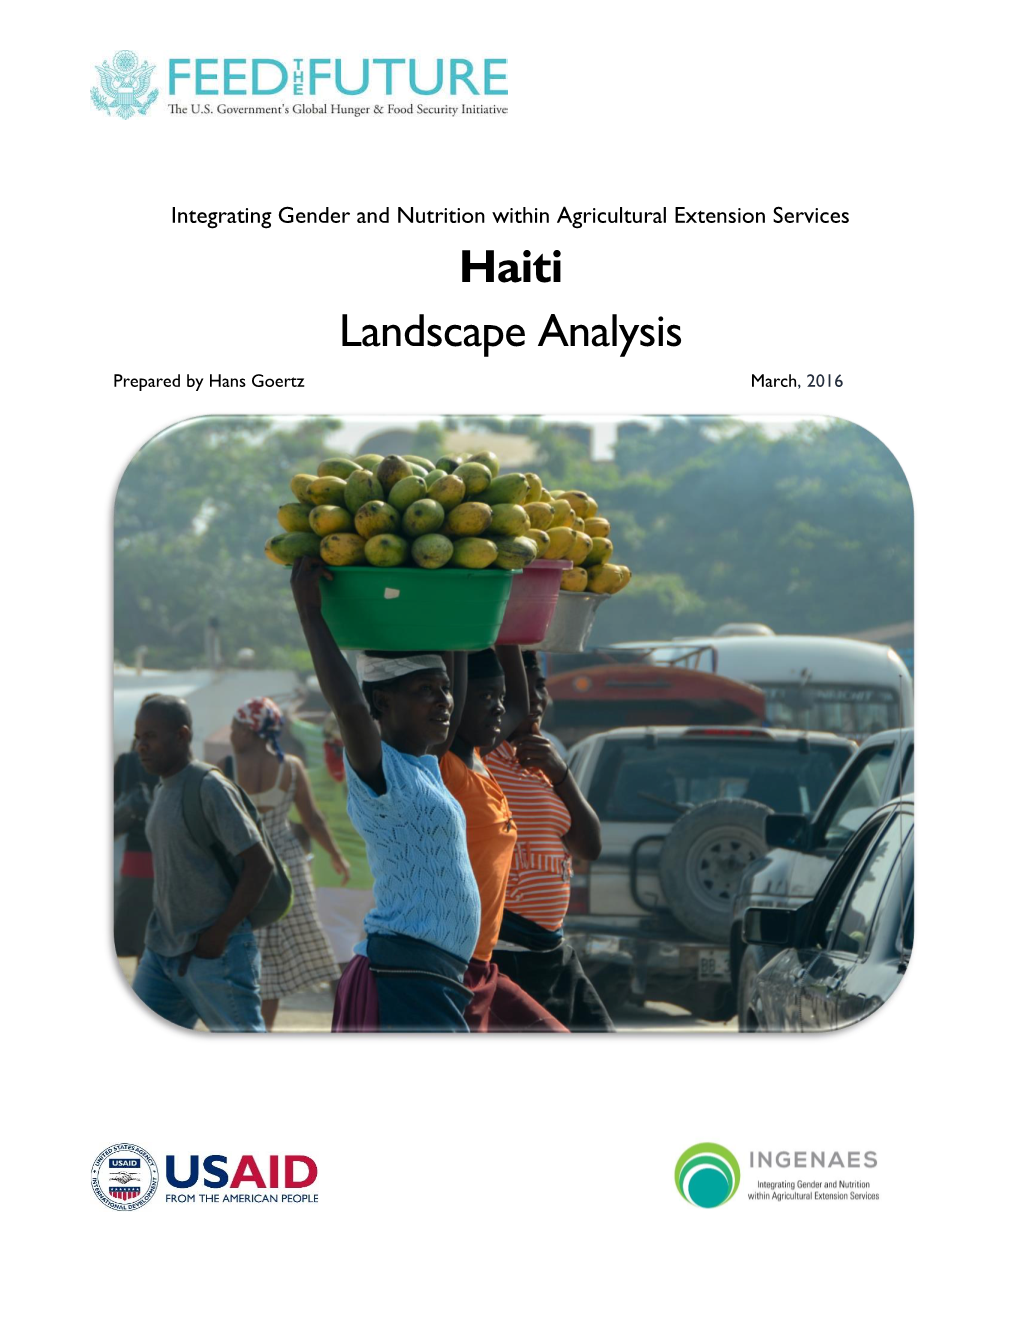 Haiti Landscape Analysis Prepared by Hans Goertz March, 2016